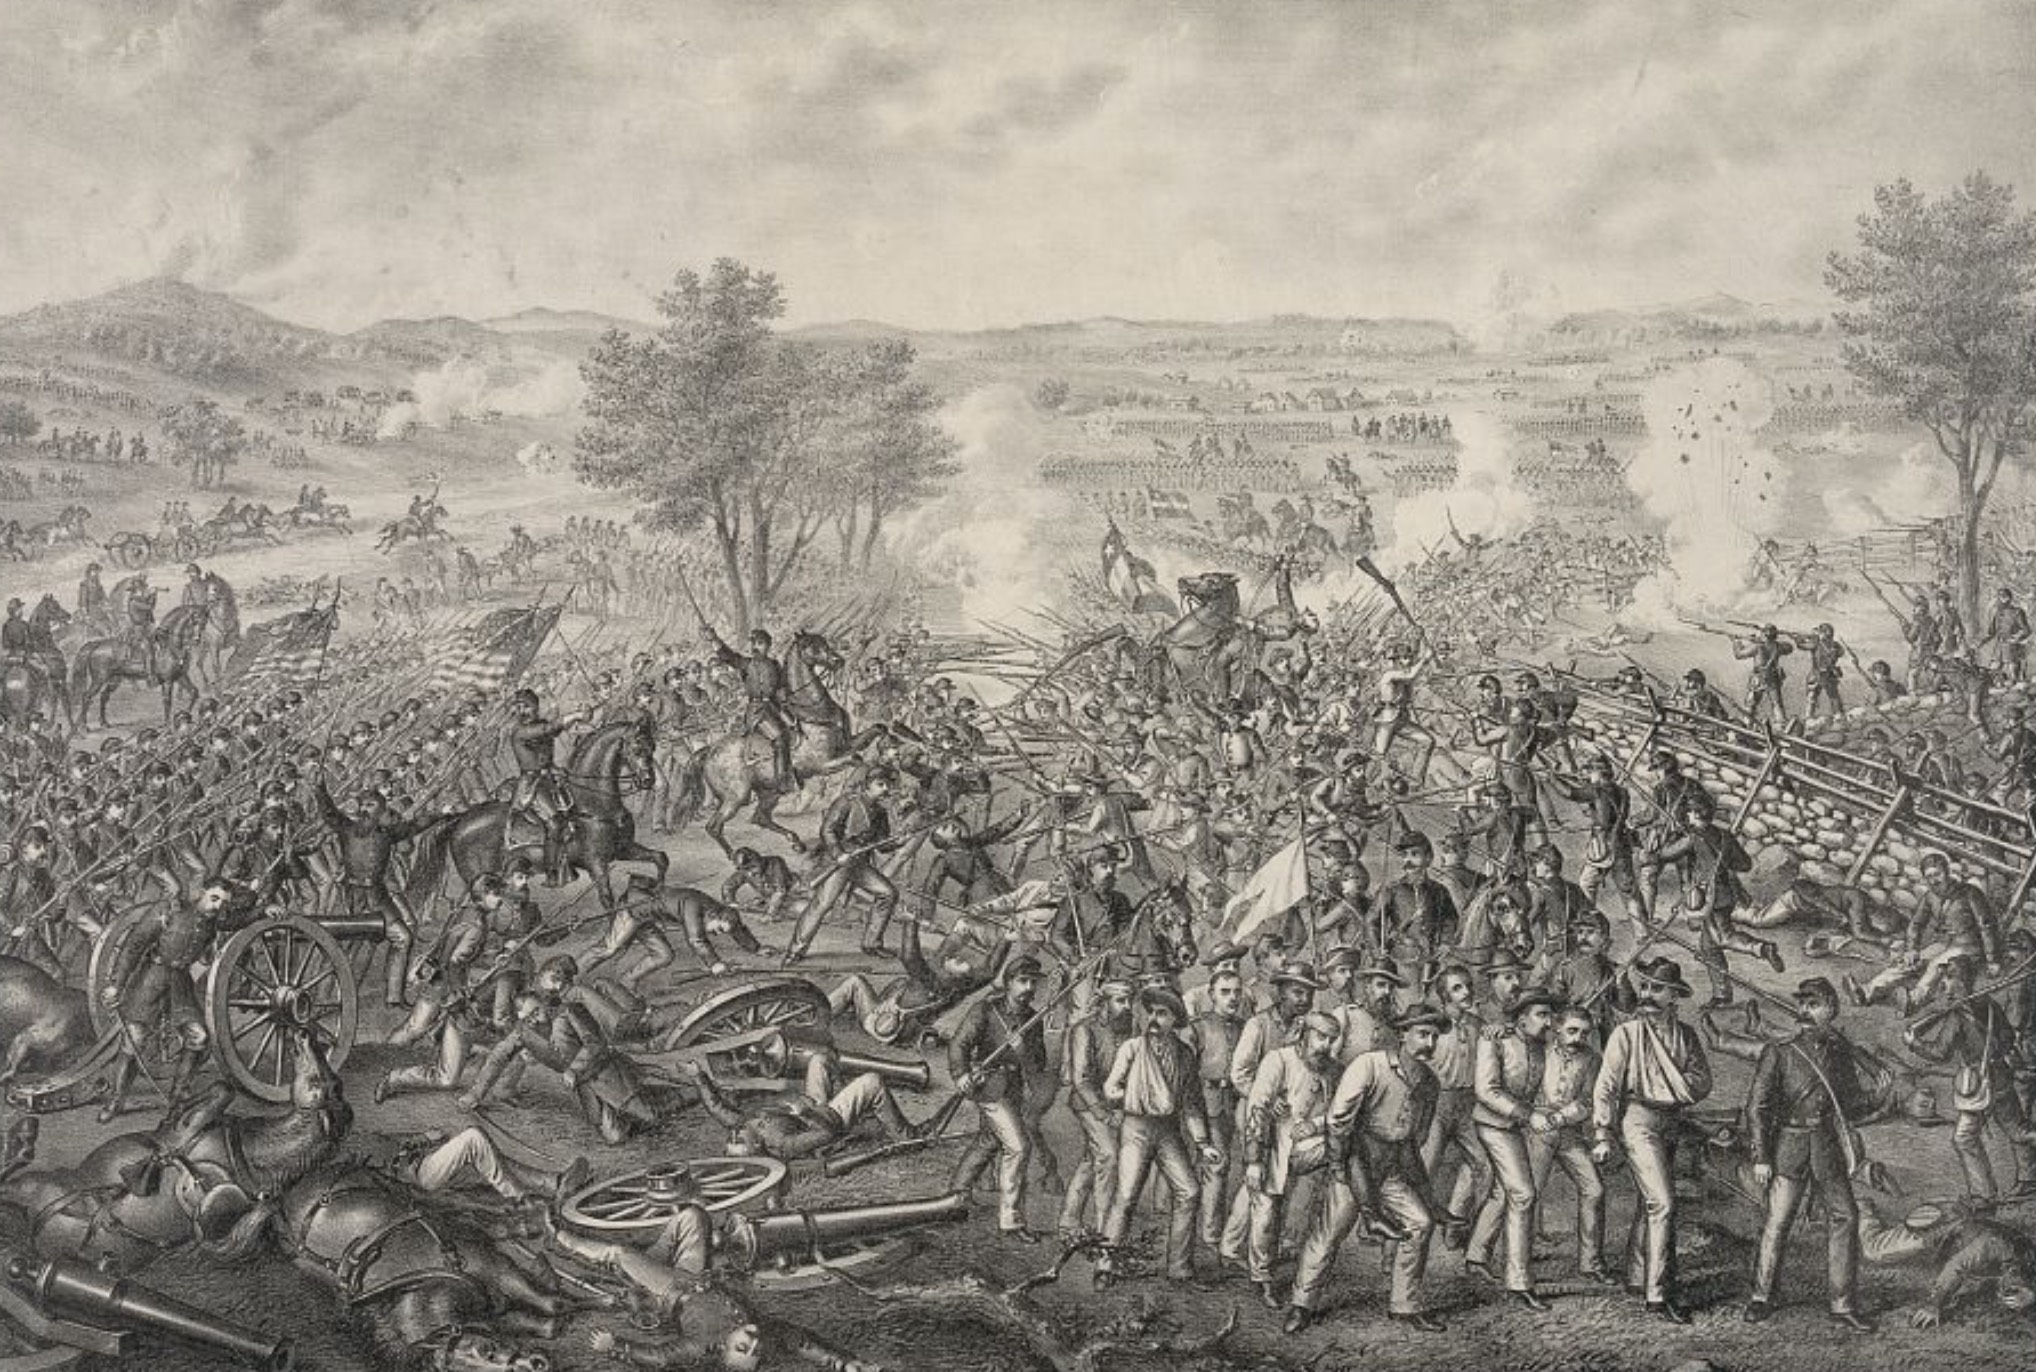 Kurz & Allison's "The Battle of Gettysburg" (1884)